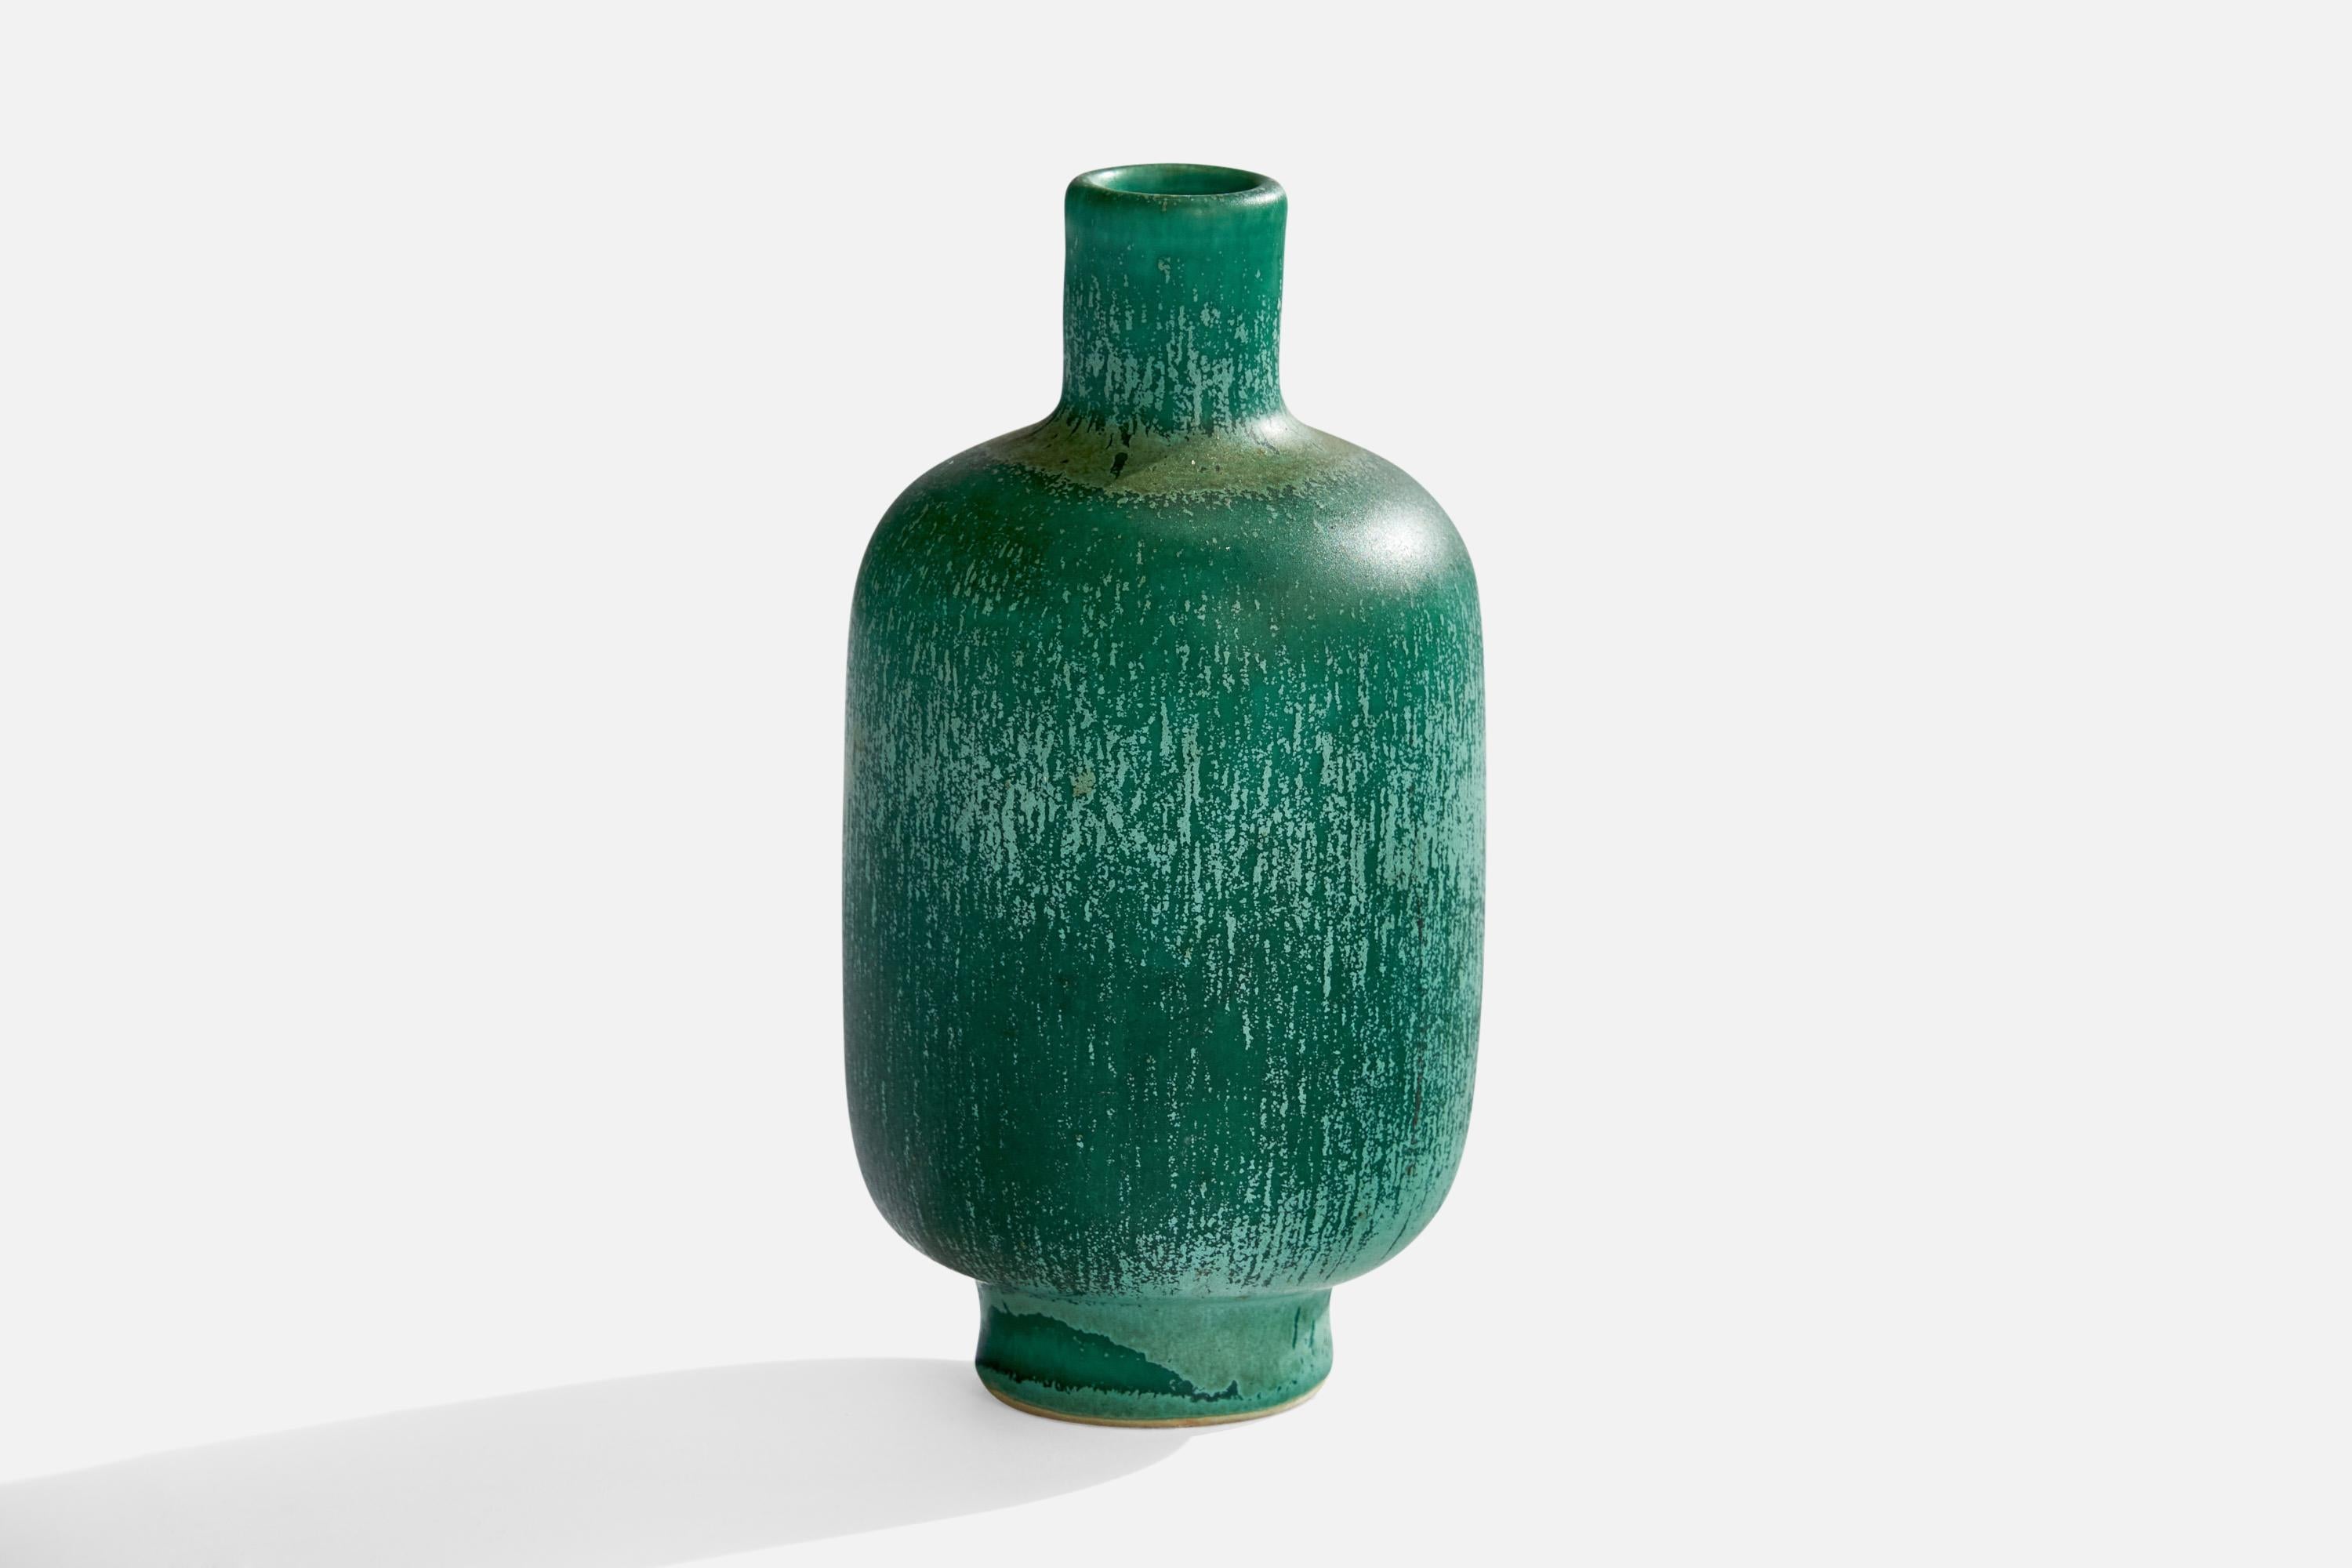 A green-glazed ceramic vase designed and produced in Sweden, 1950s.